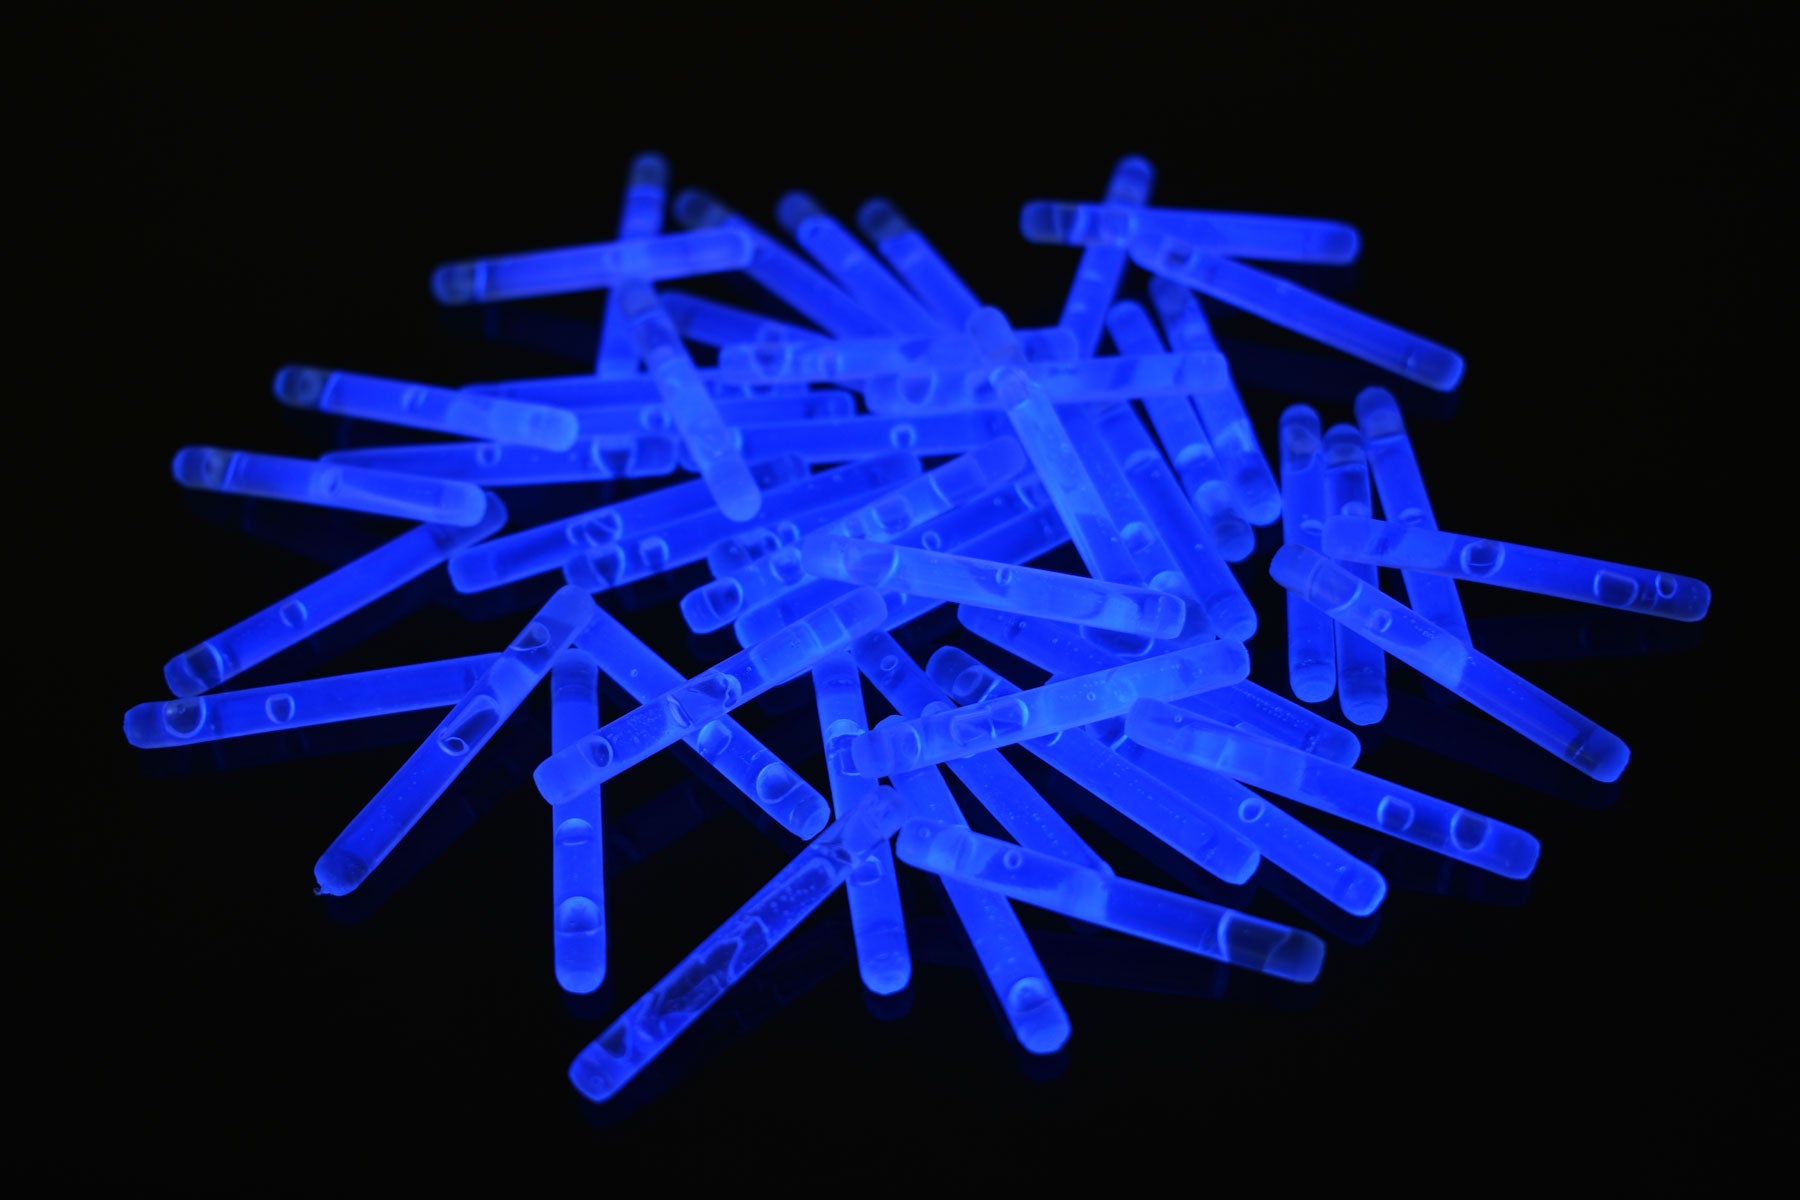 50 Blue Mini Glow Sticks for Fun, Fishing and More